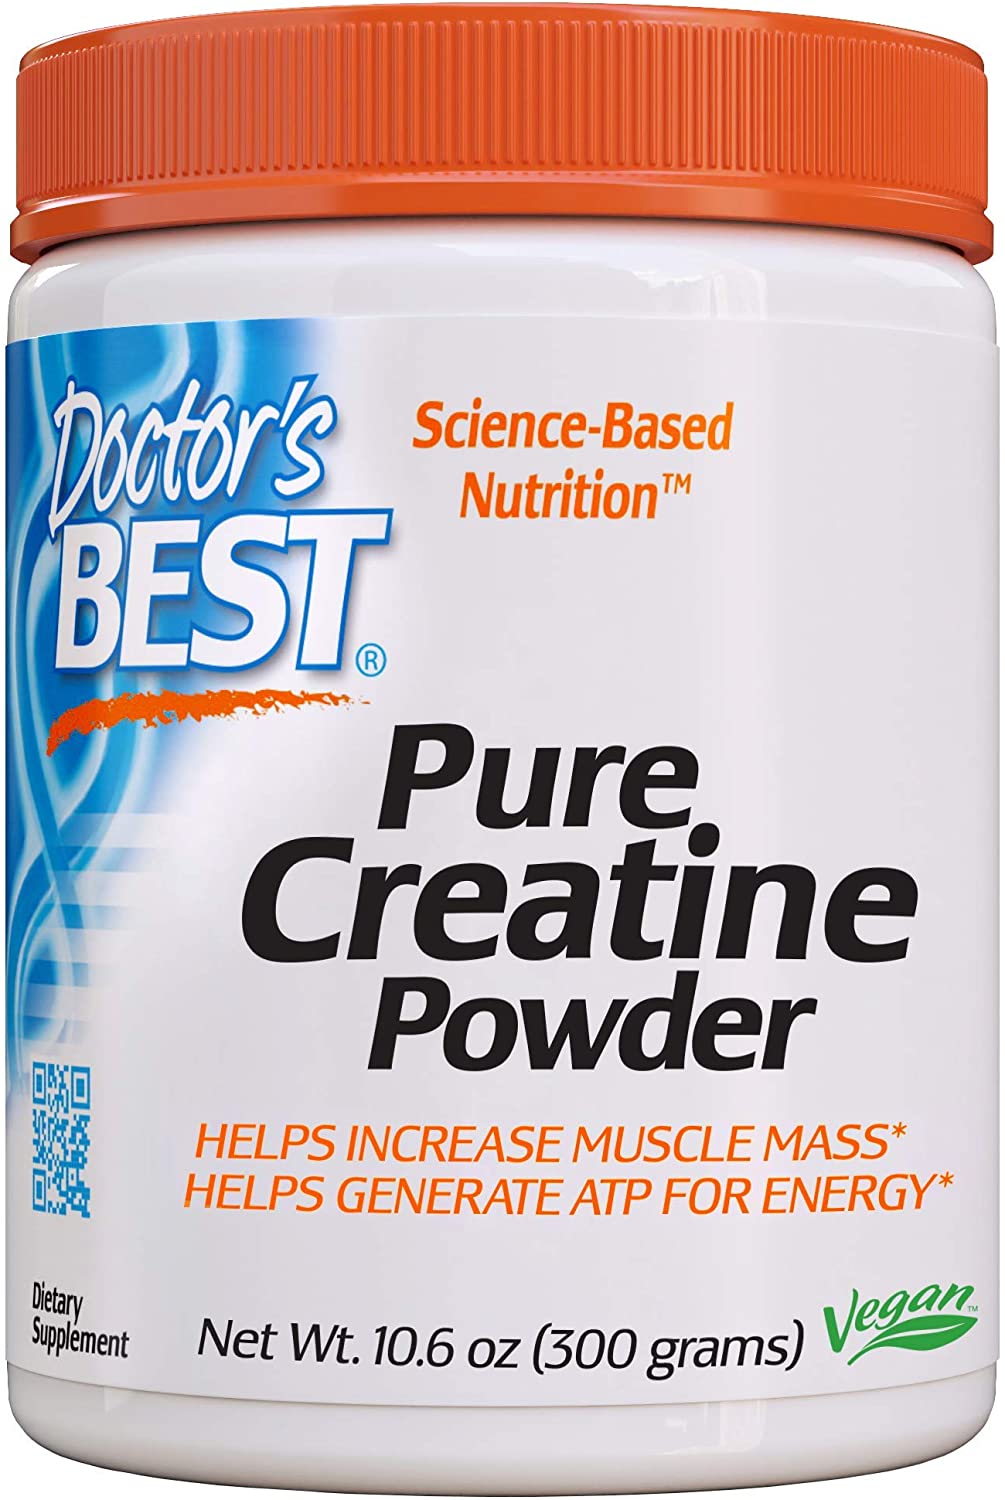 Doctor’s Best Pure Vegan Creatine Powder